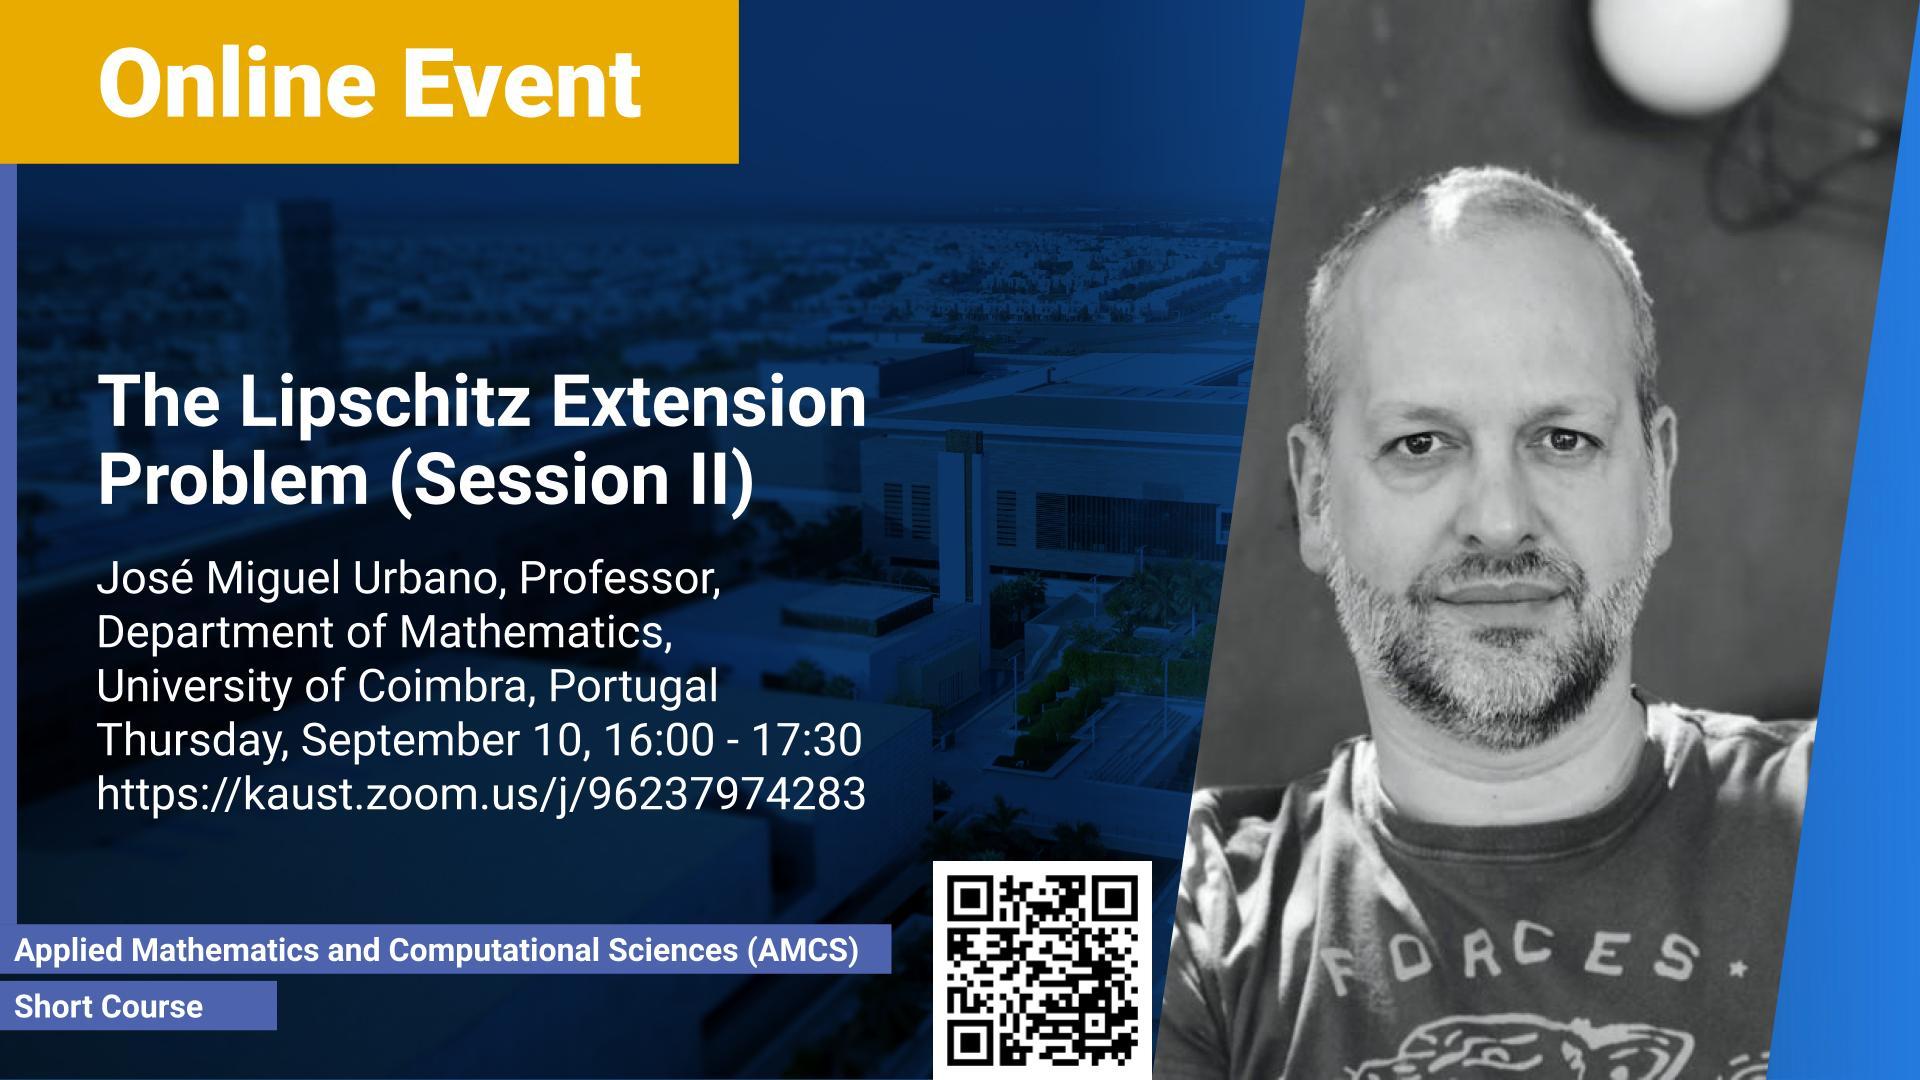 KAUST-CEMSE-AMCS-Short Course-José Miguel Urbano-The Lipschitz Extension Problem (Session II).jpg